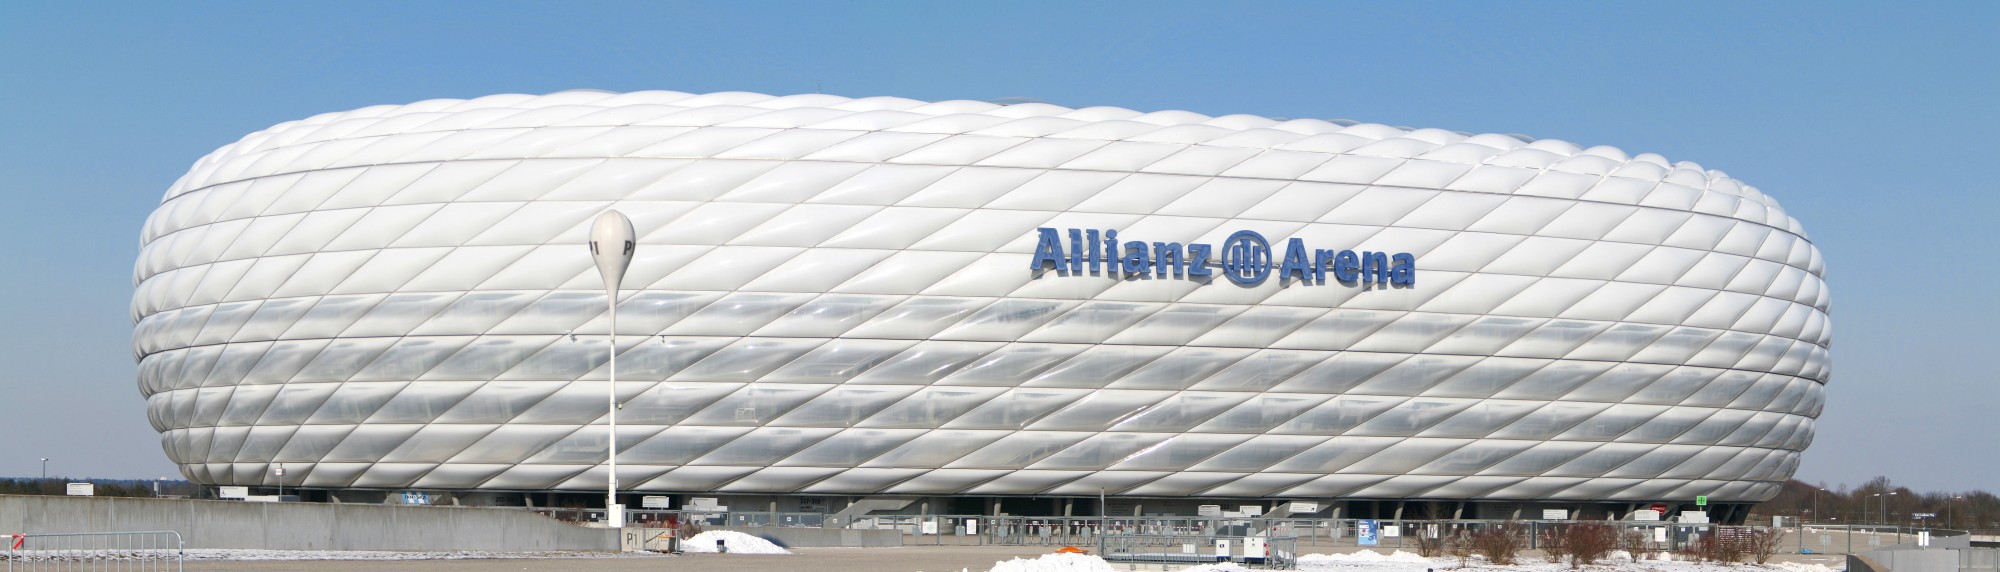 Panorámica Allianz-Arena, Múnich, Alemania2